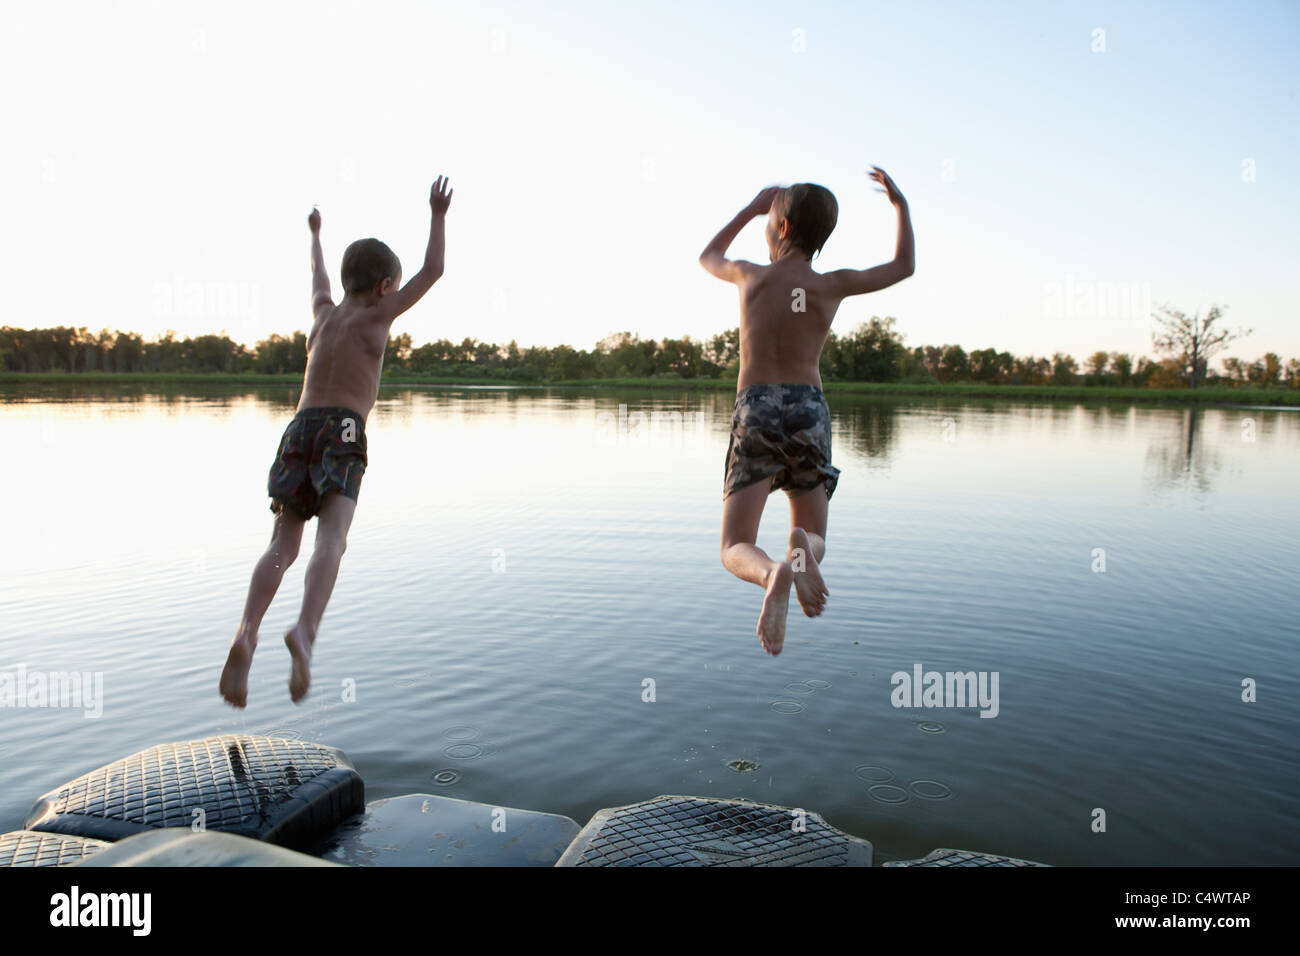 USA,Texas,Texarkana,deux garçons (8-9) sauter dans le lac Banque D'Images